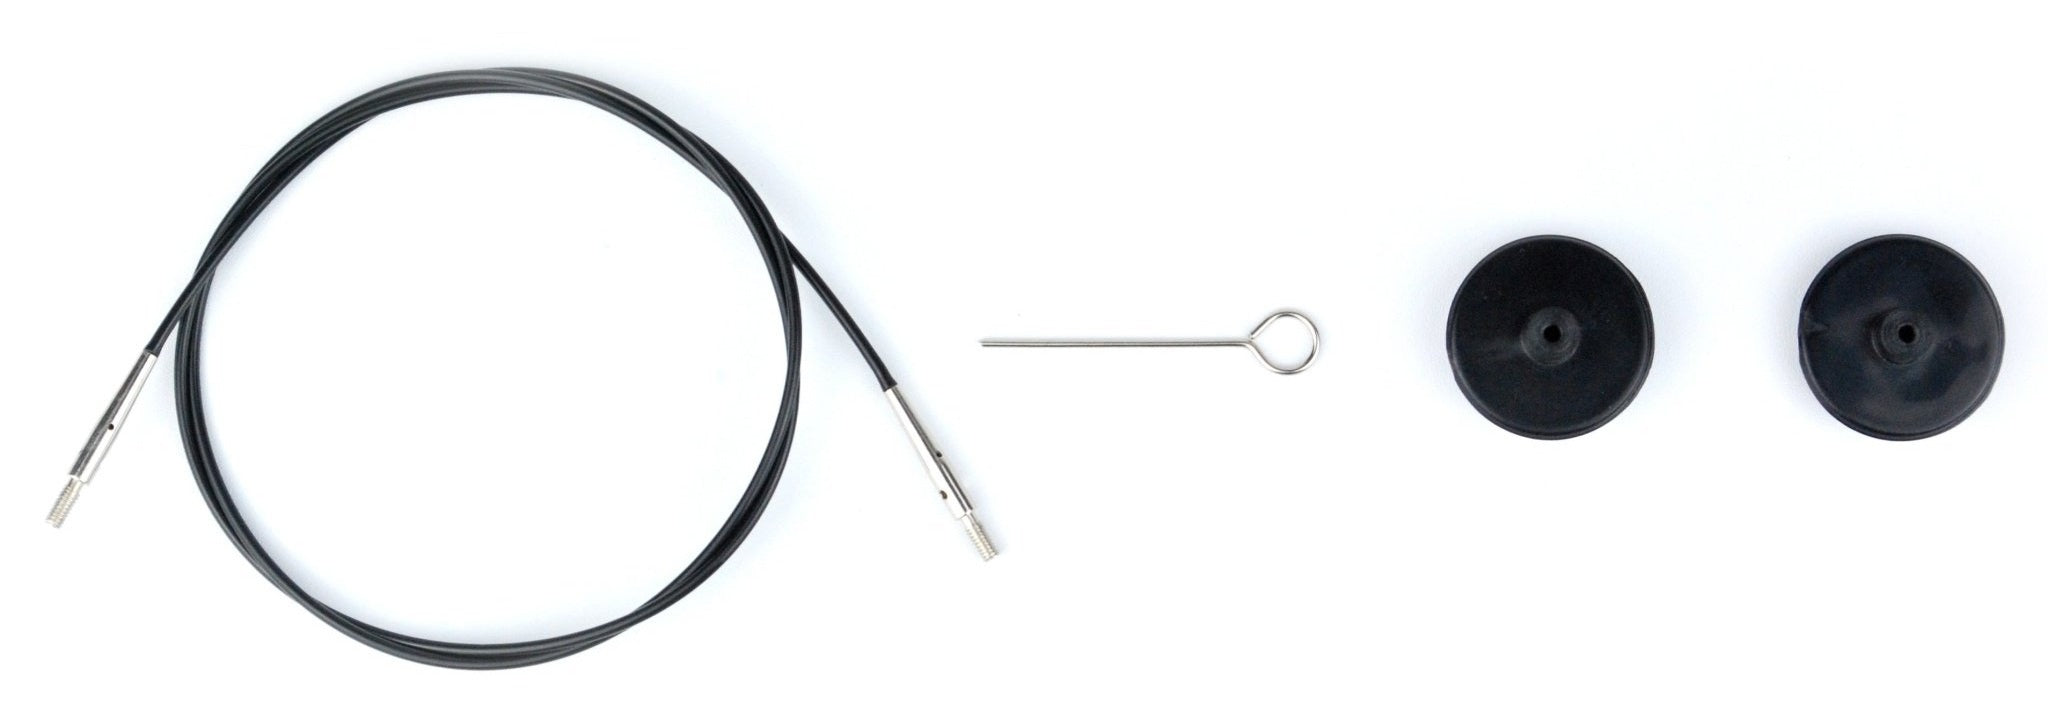 Lykke 24/60cm Cord for 5 Interchangeable Needle Tips - Urban Yarns